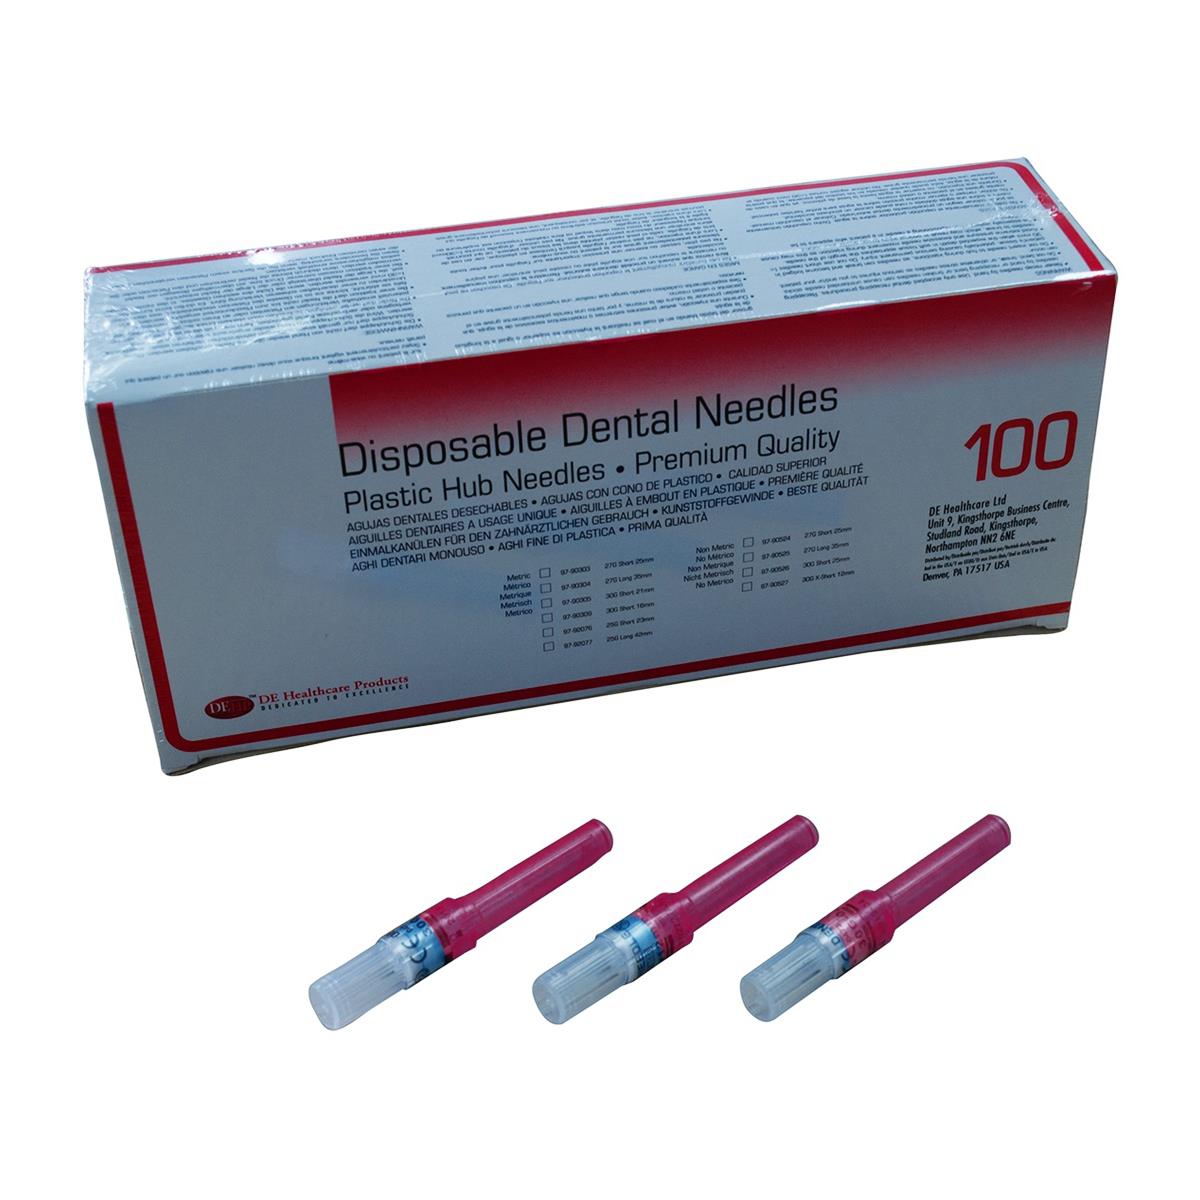 DEHP Needles Plastic Hub Disposable 30G Short 100pk